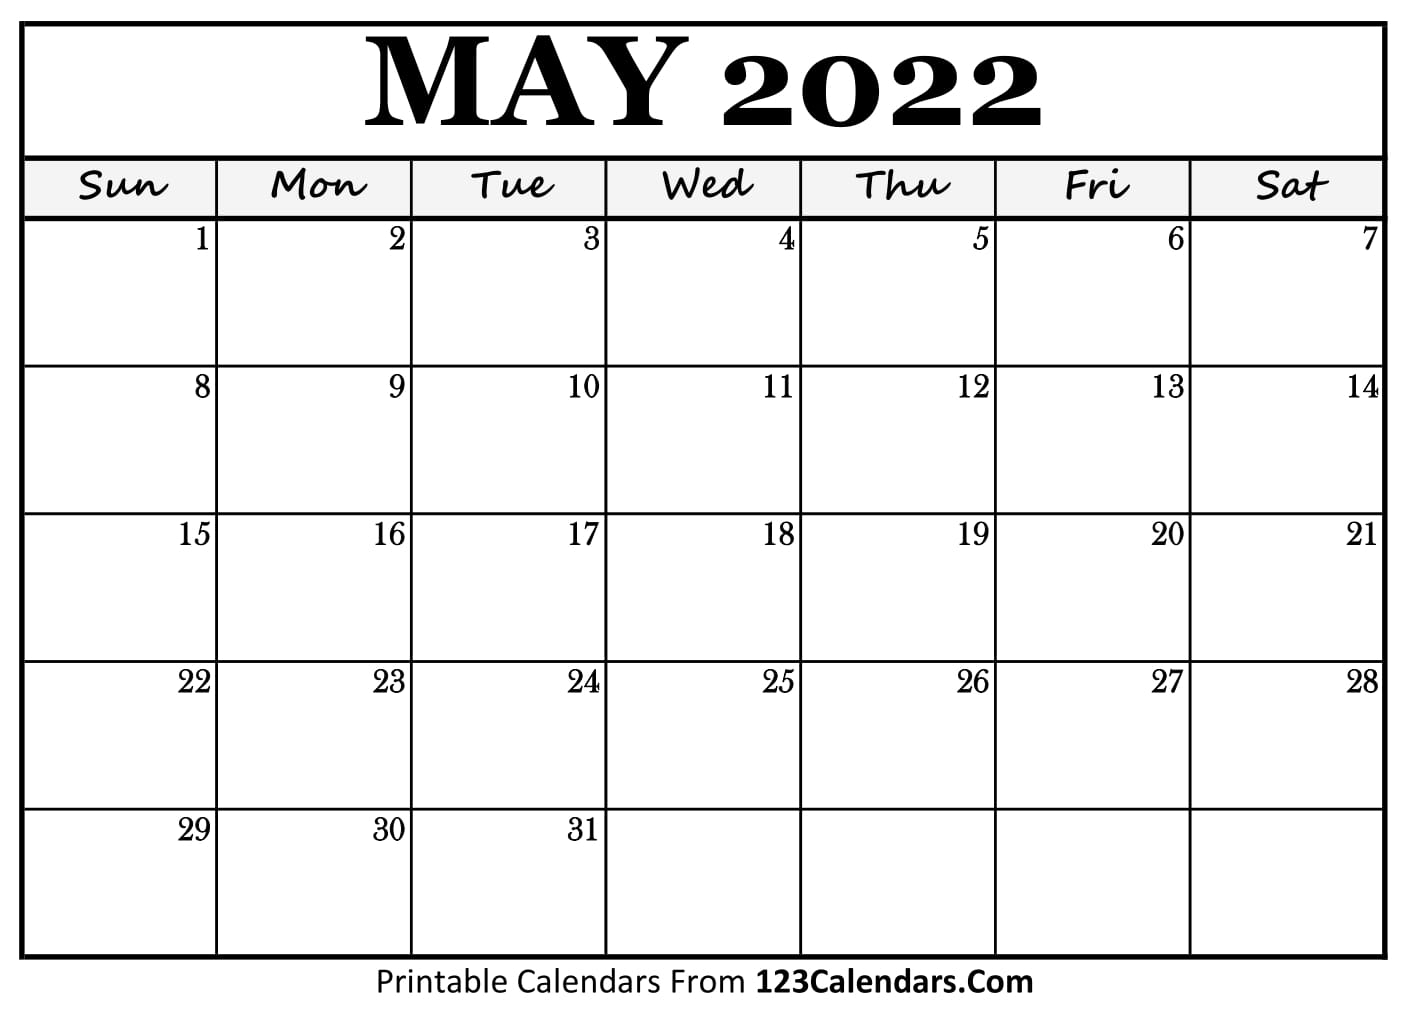 Print May 2022 Calendar Printable May 2022 Calendar Templates - 123Calendars.com